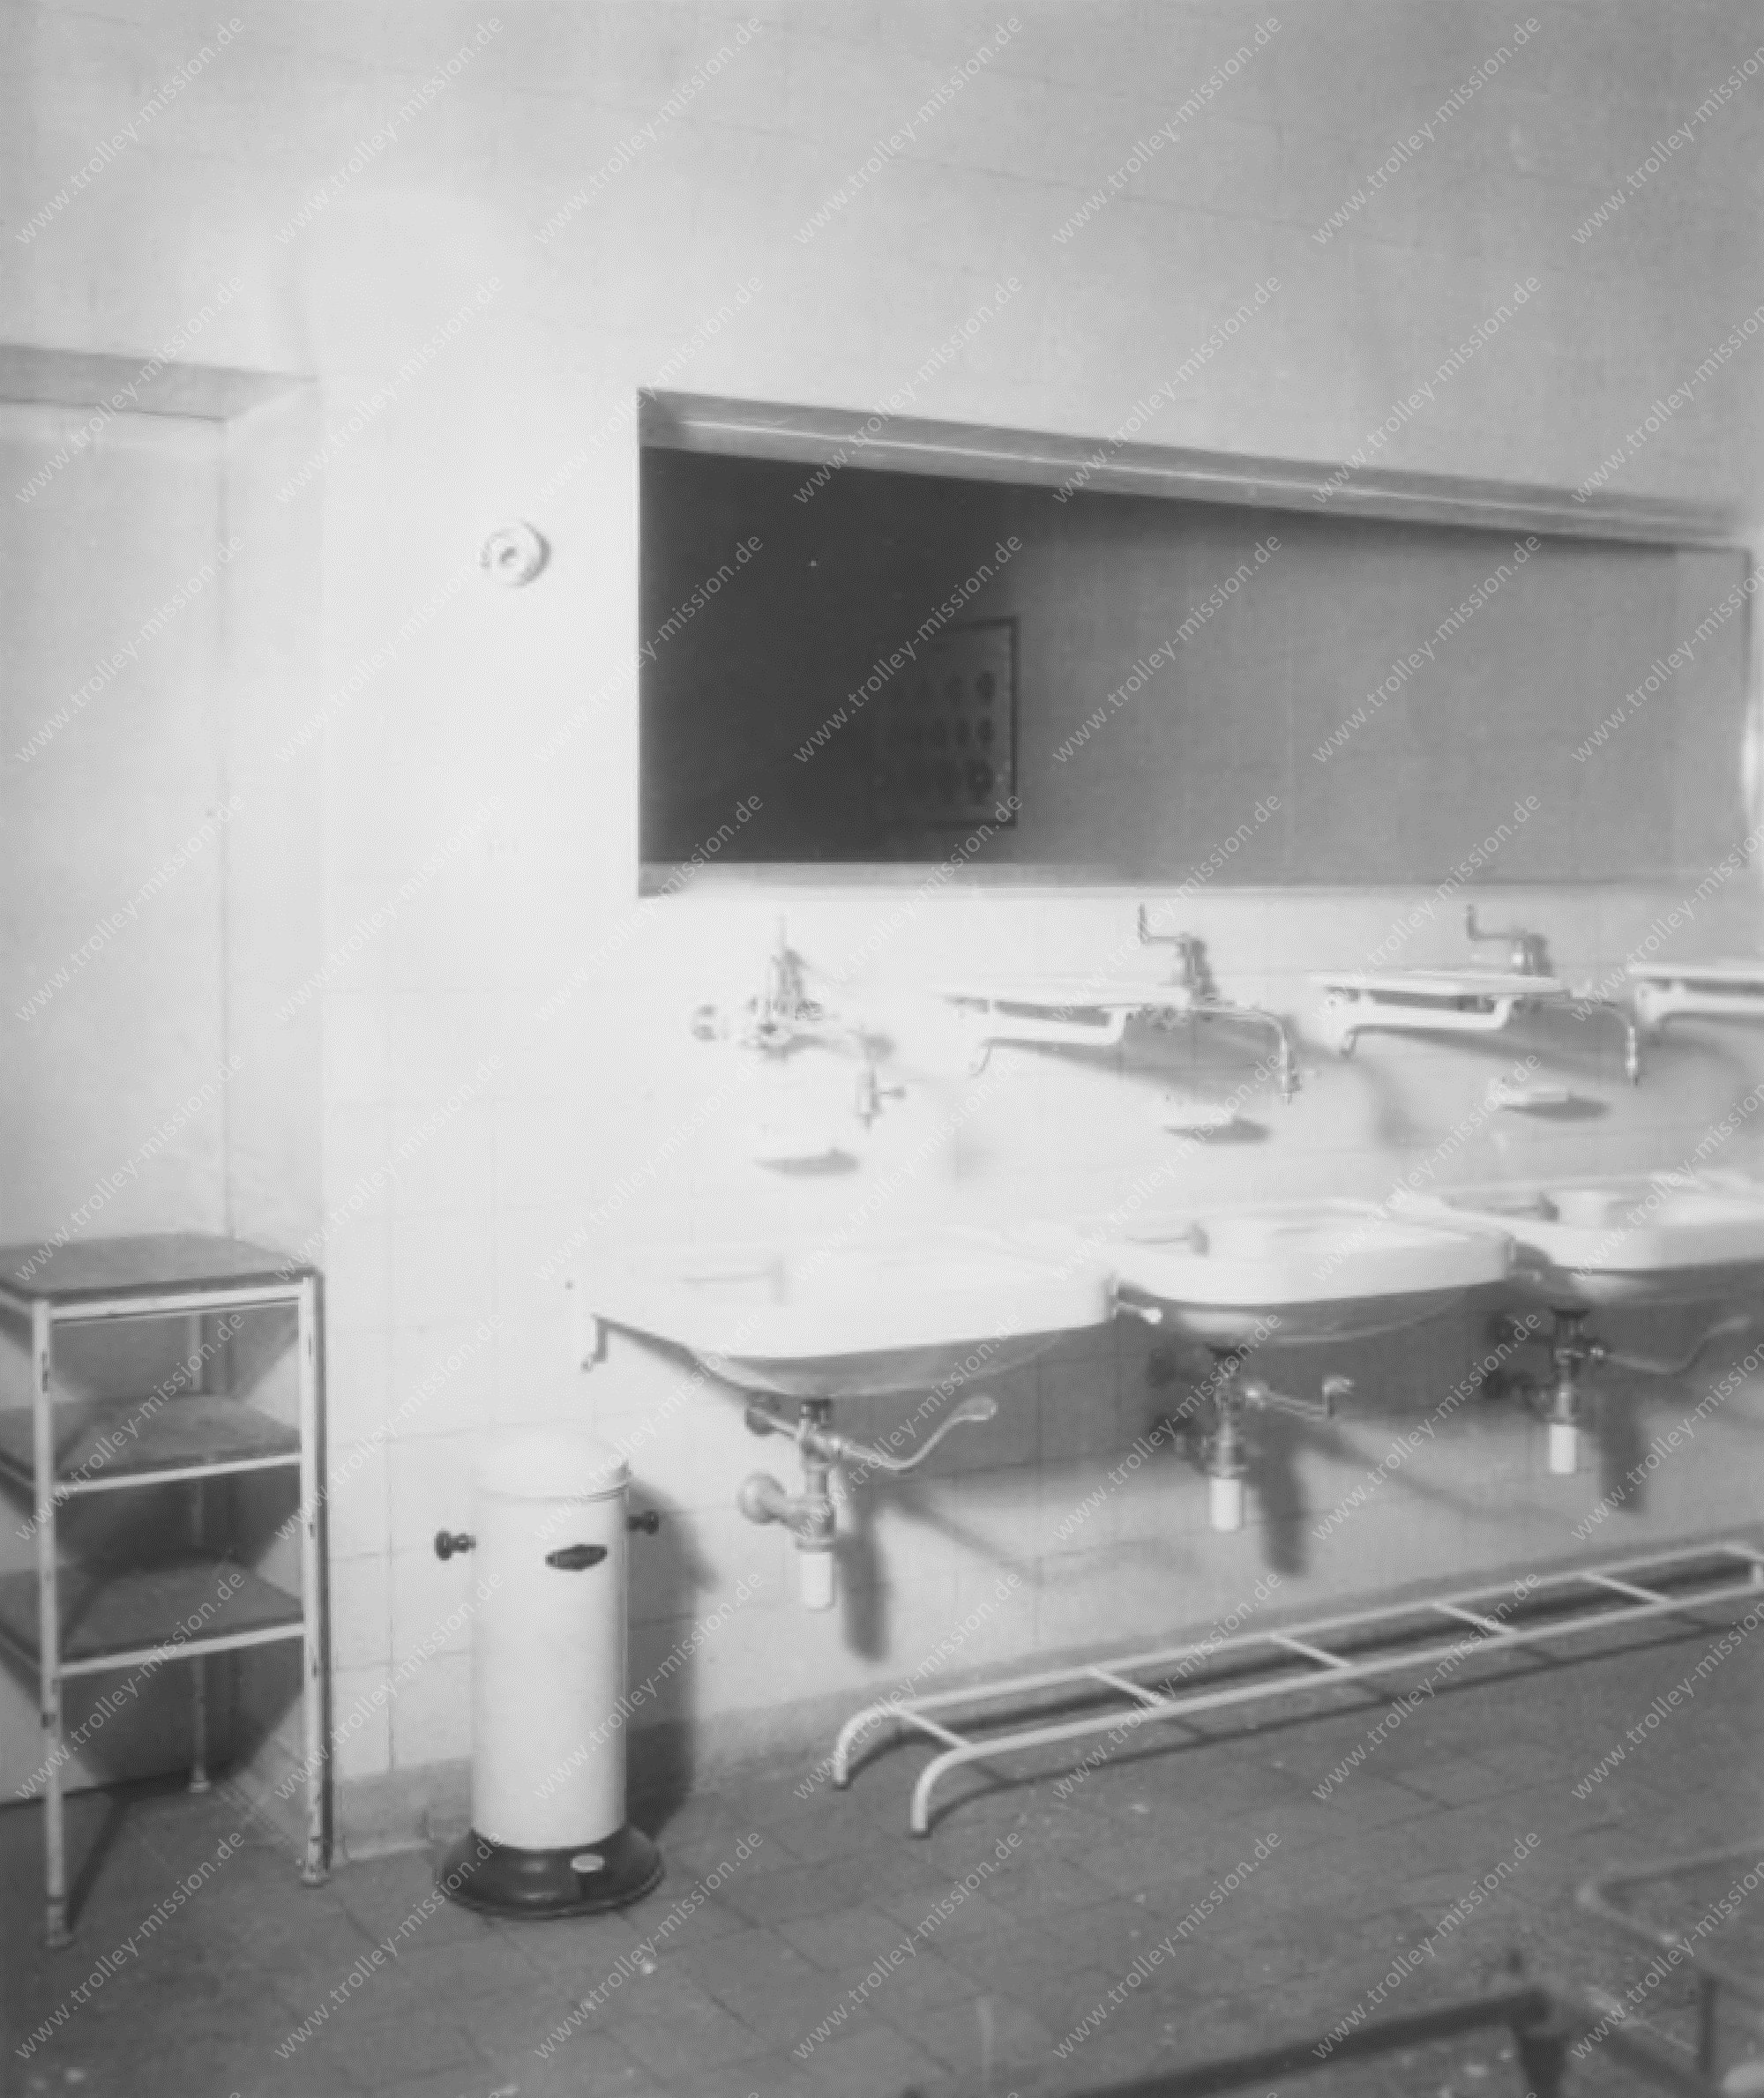 Zweiter Weltkrieg - Luftschutz - Tiefbunker - Krankenhaus - Bunker - Offenbach am Main